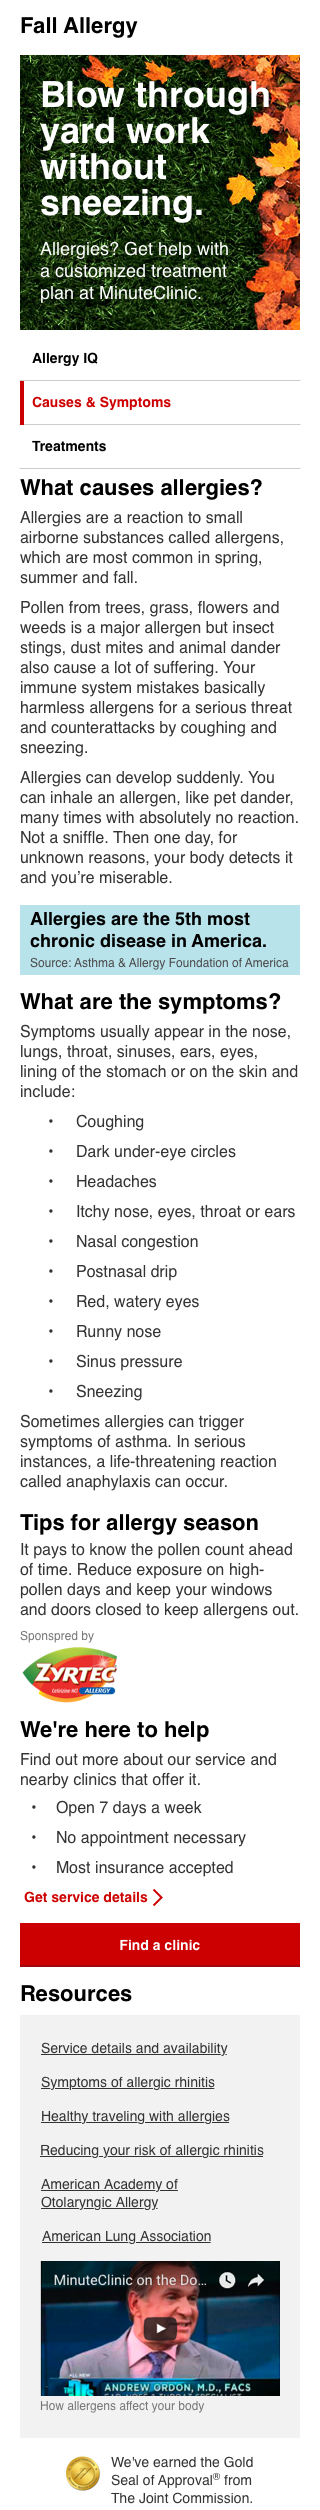 allergies_symptoms_mobile.jpg